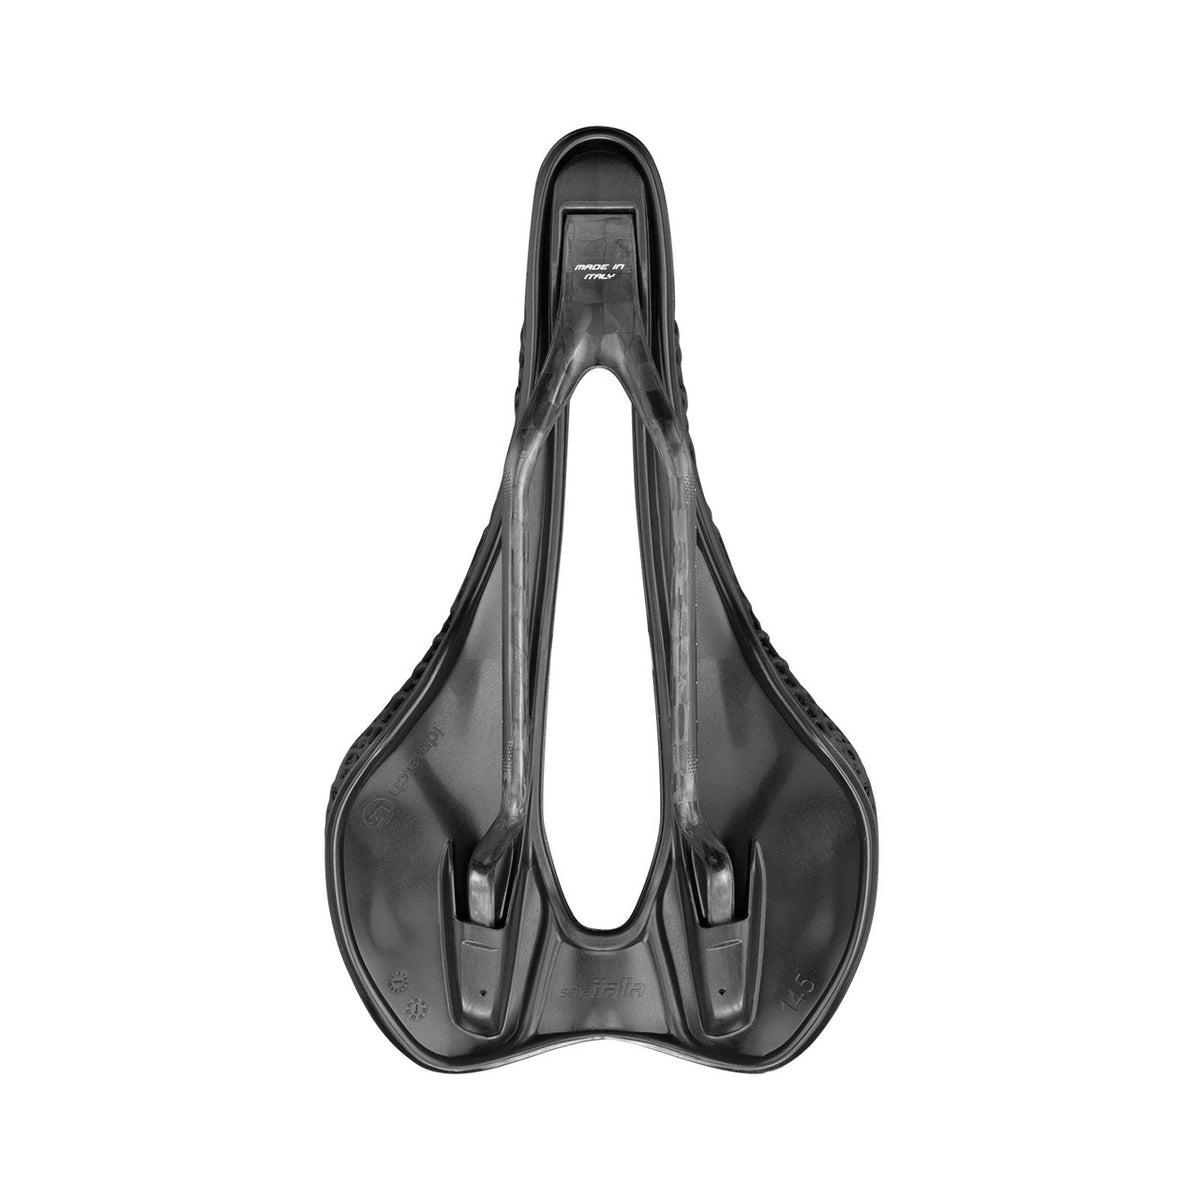 Selle Italia SLR Boost Kit Carbonio Superflow Saddle (Black) (S3) (130mm) -  Performance Bicycle